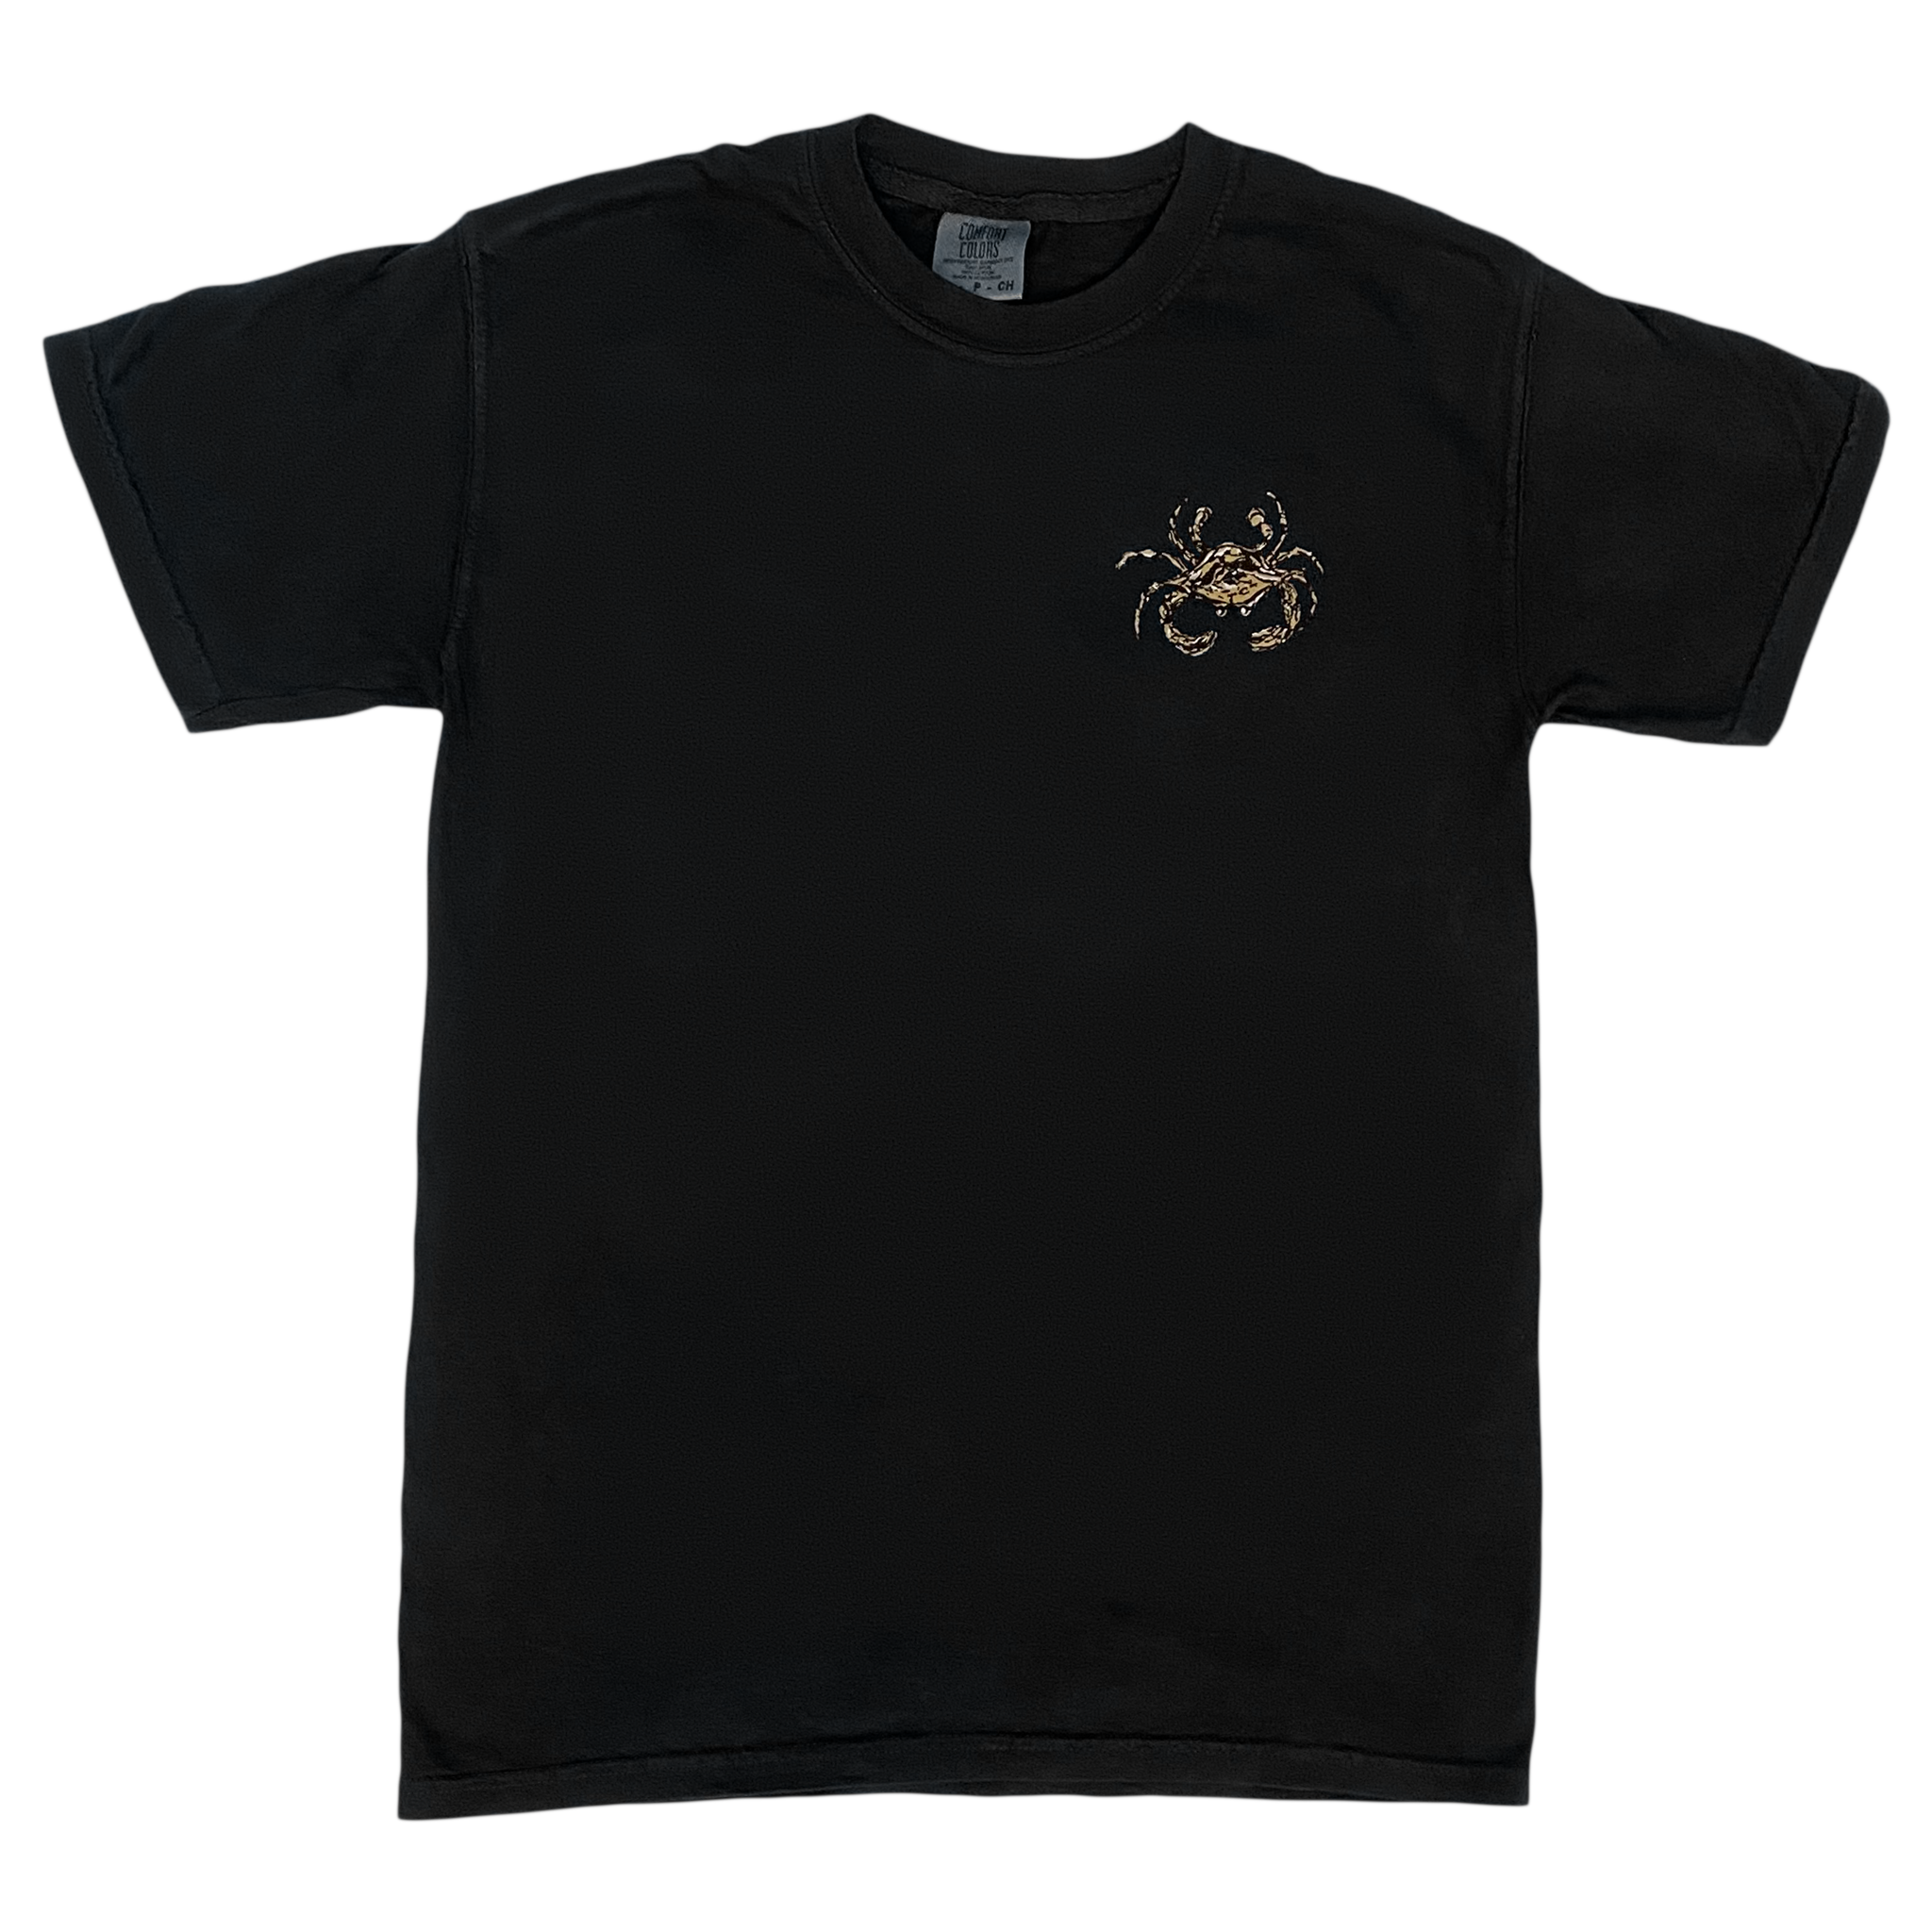 Black & Gold Adult Short Sleeve T-shirt